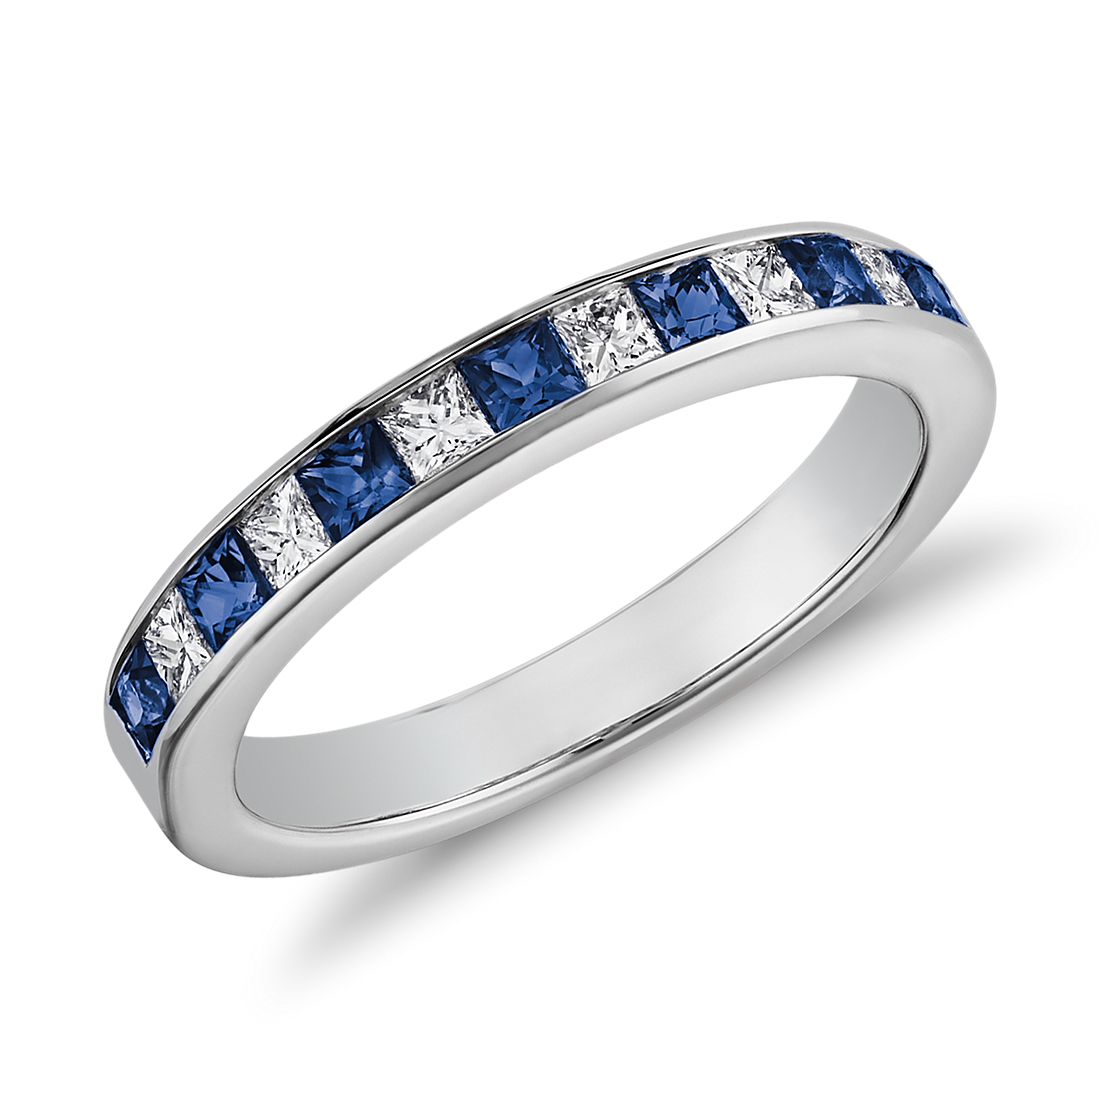 5. Channel-Set Princess Cut Sapphire and Diamond Ring